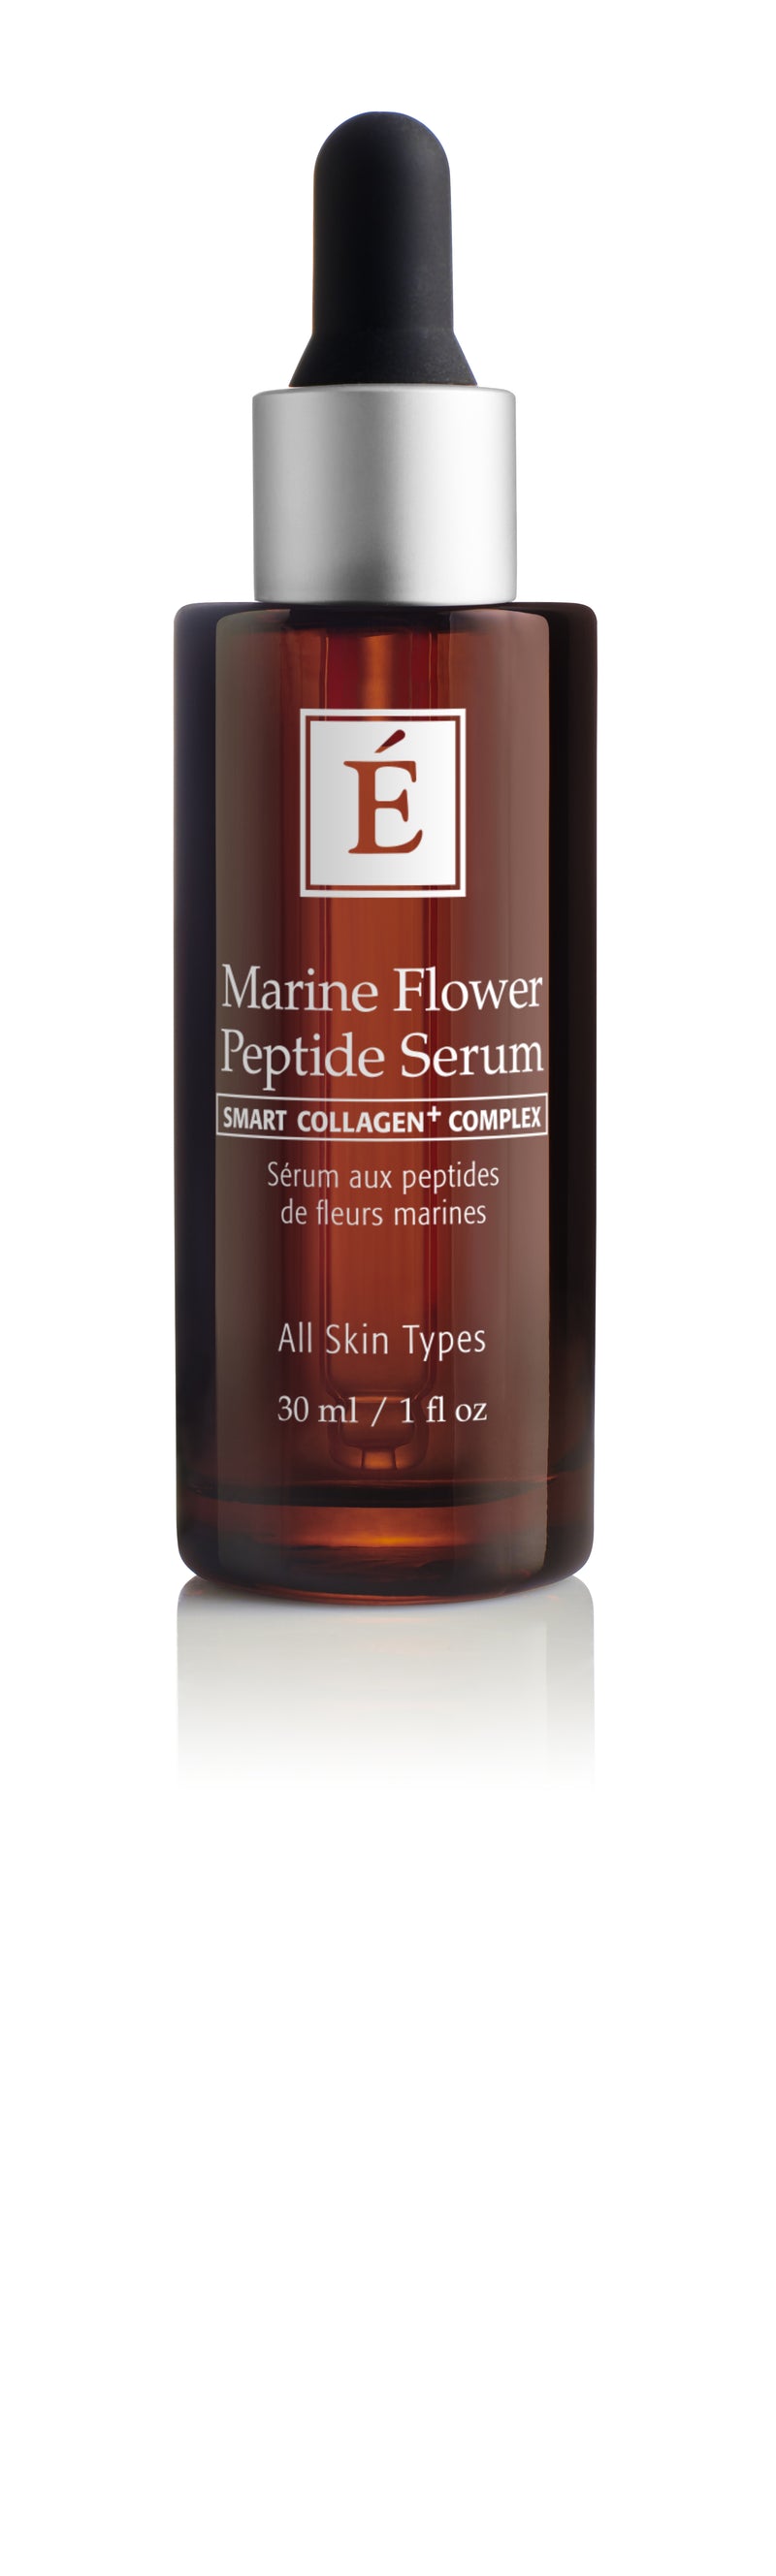 Marine Flower Peptide Serum